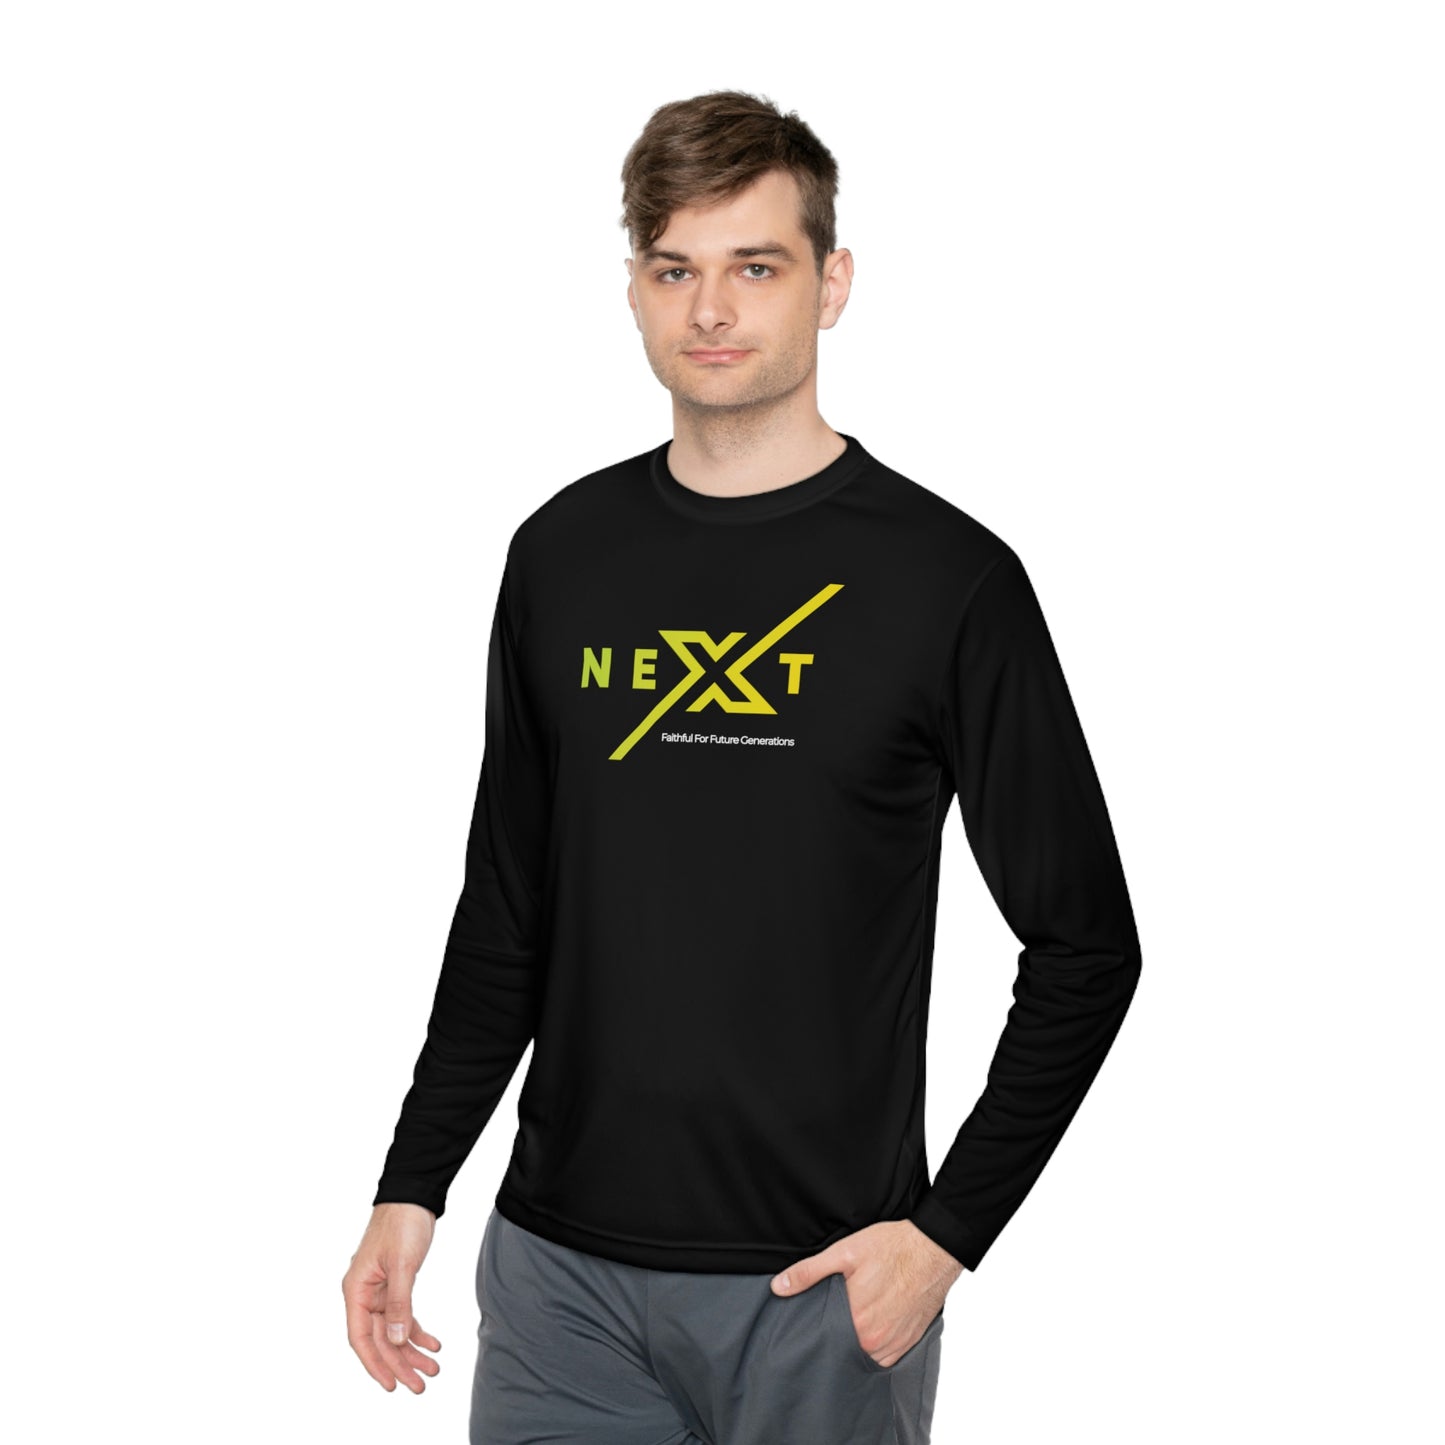 NEXT / Unisex Lightweight Long Sleeve Tee